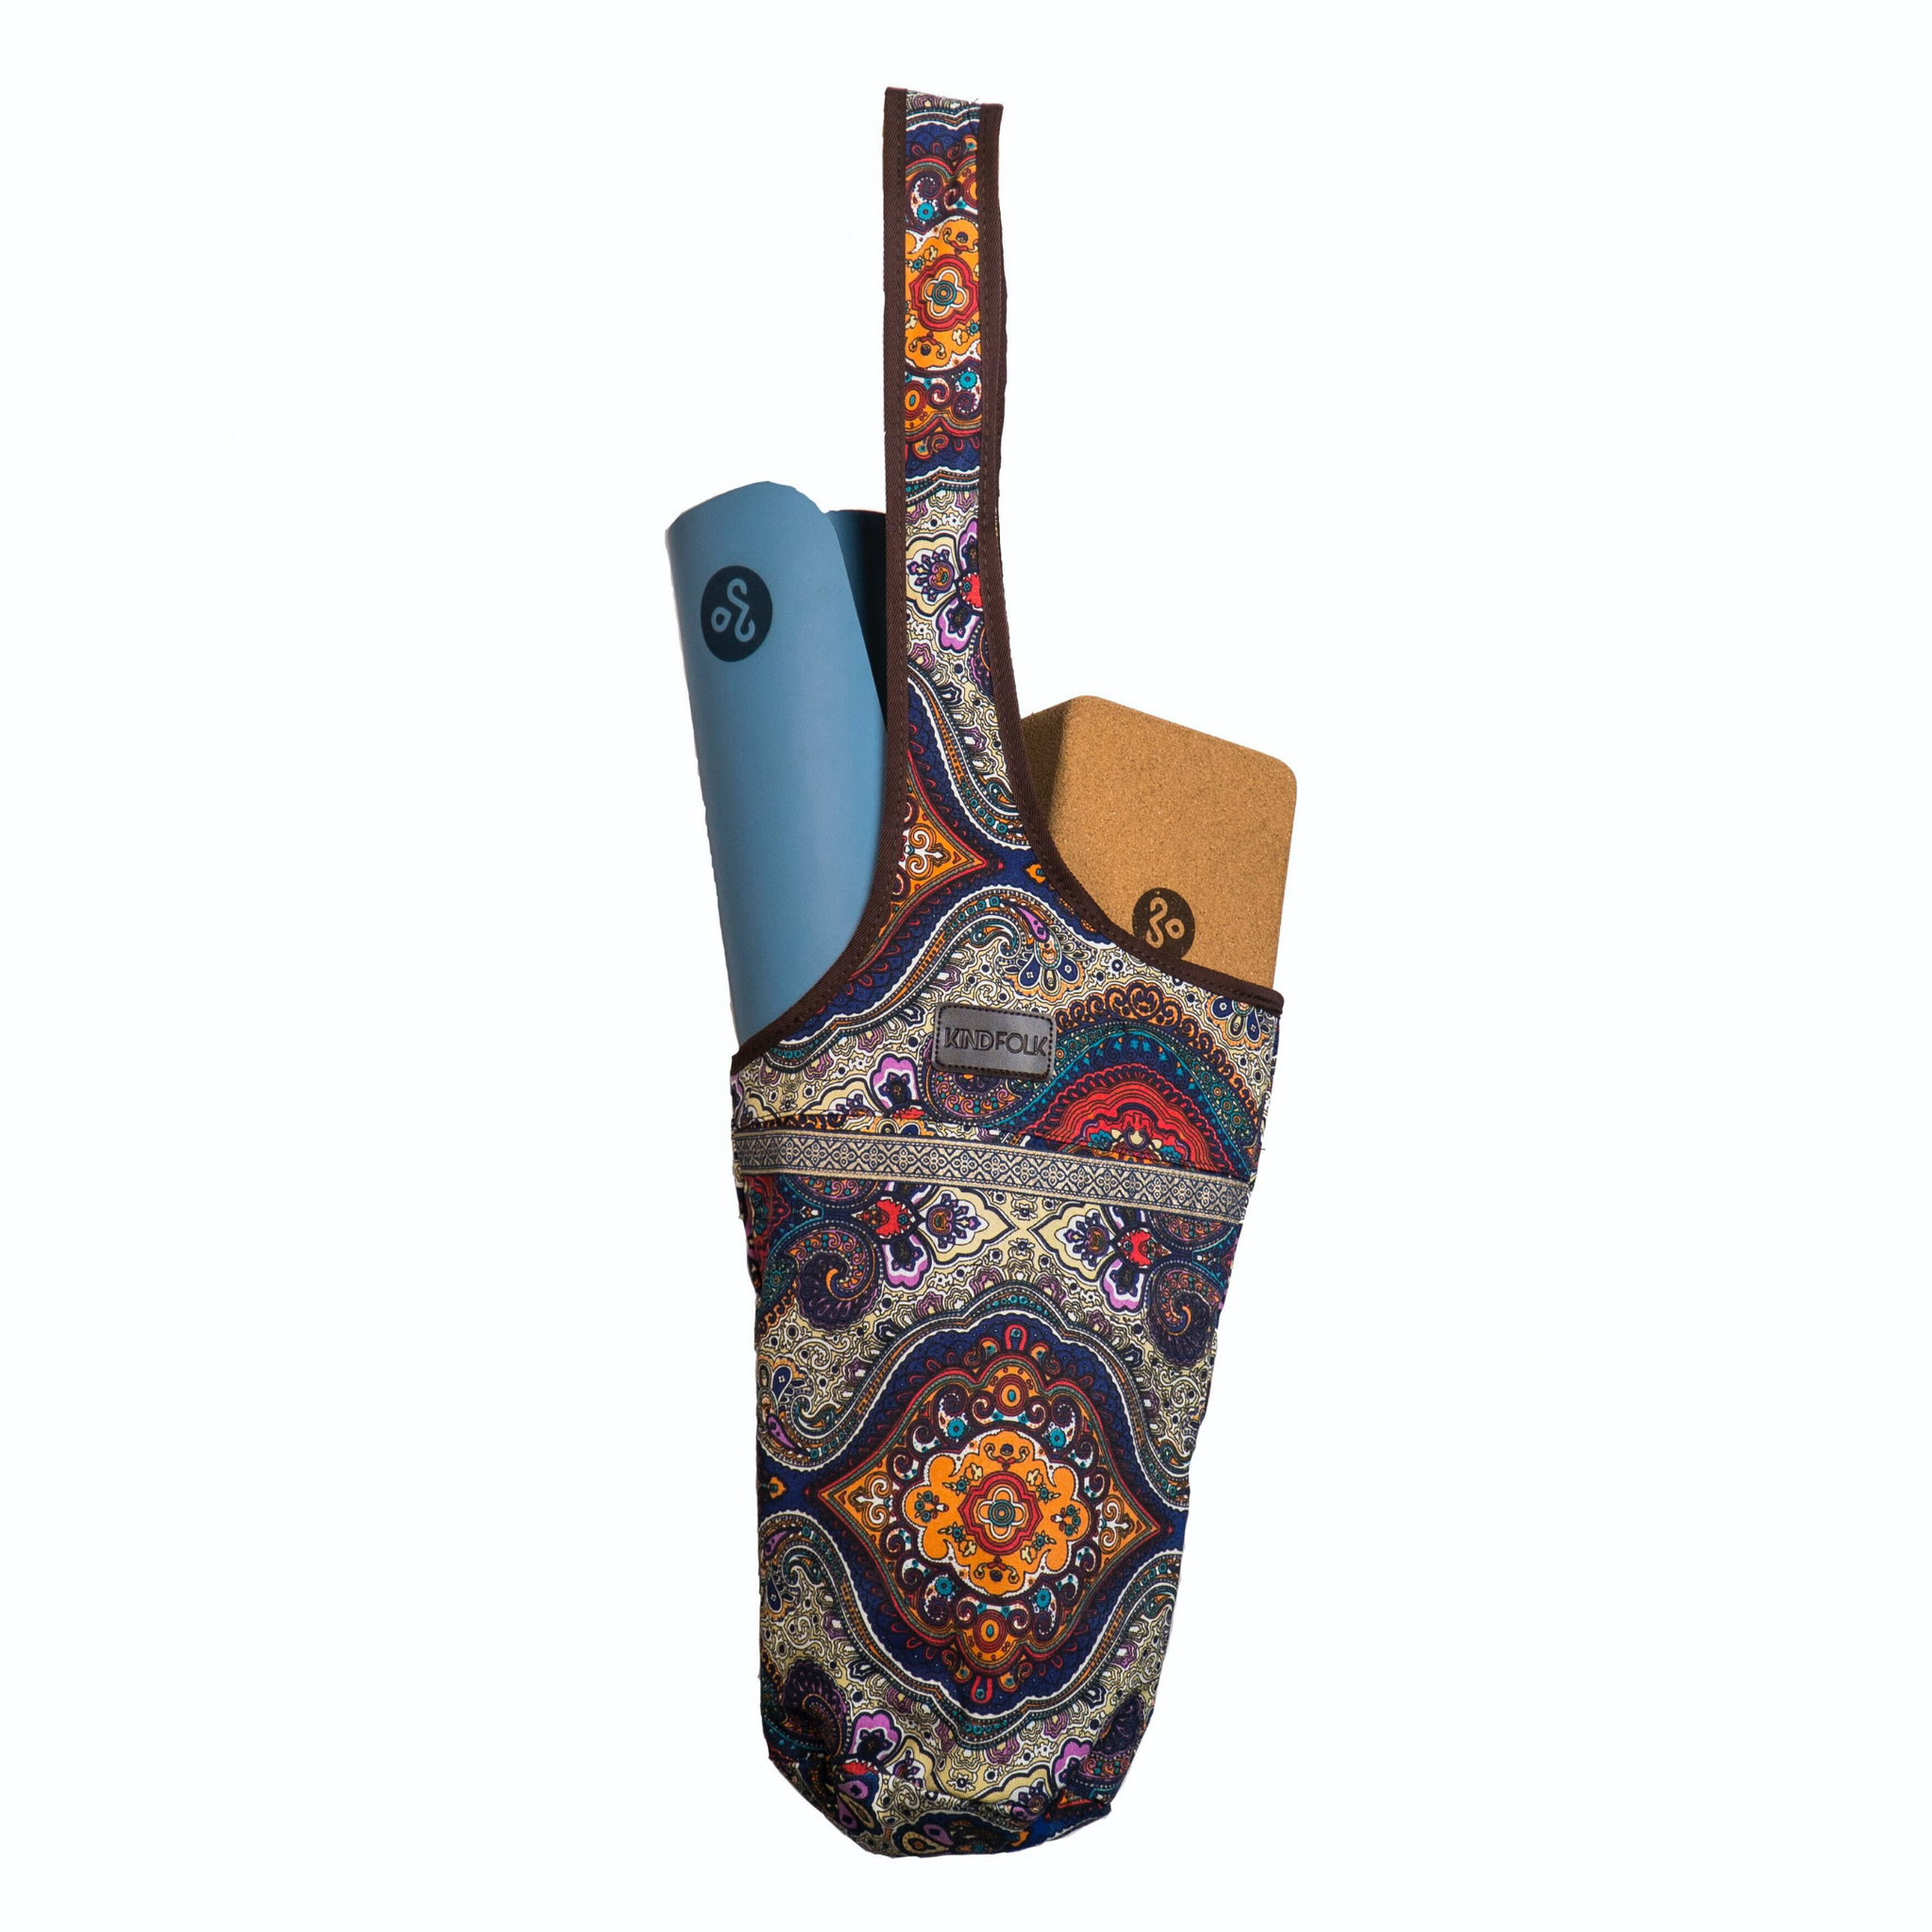  Ewedoos Yoga Mat Bag with Large Size Pocket and